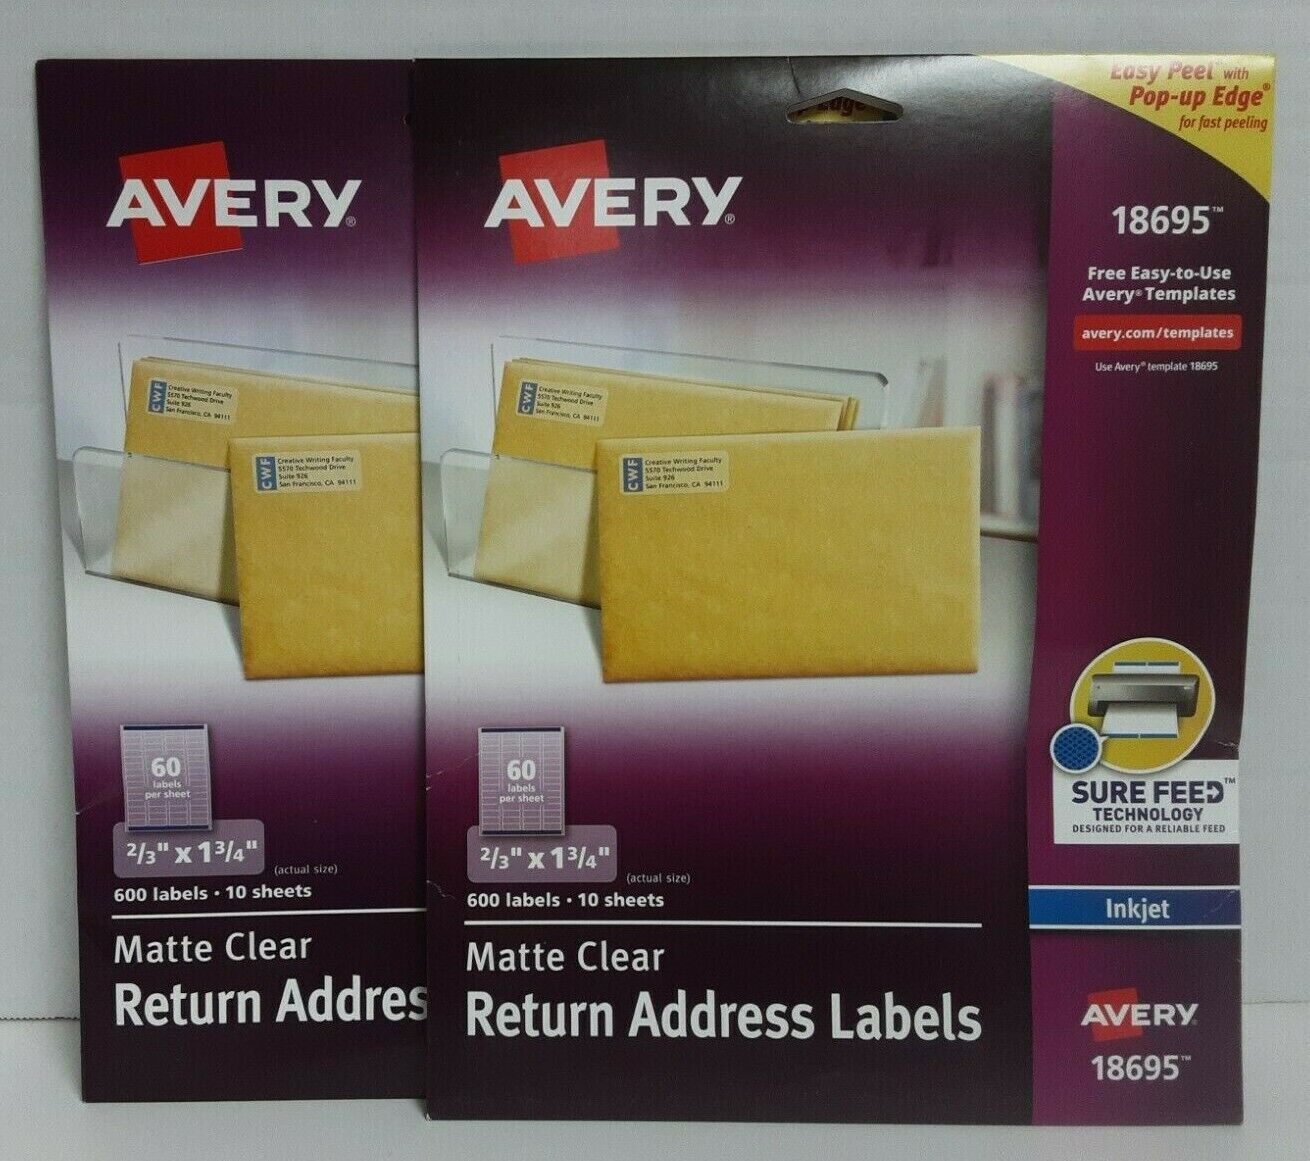 2 Overseas parallel import regular item packs AVERY 18695 Matte Clear Return 3